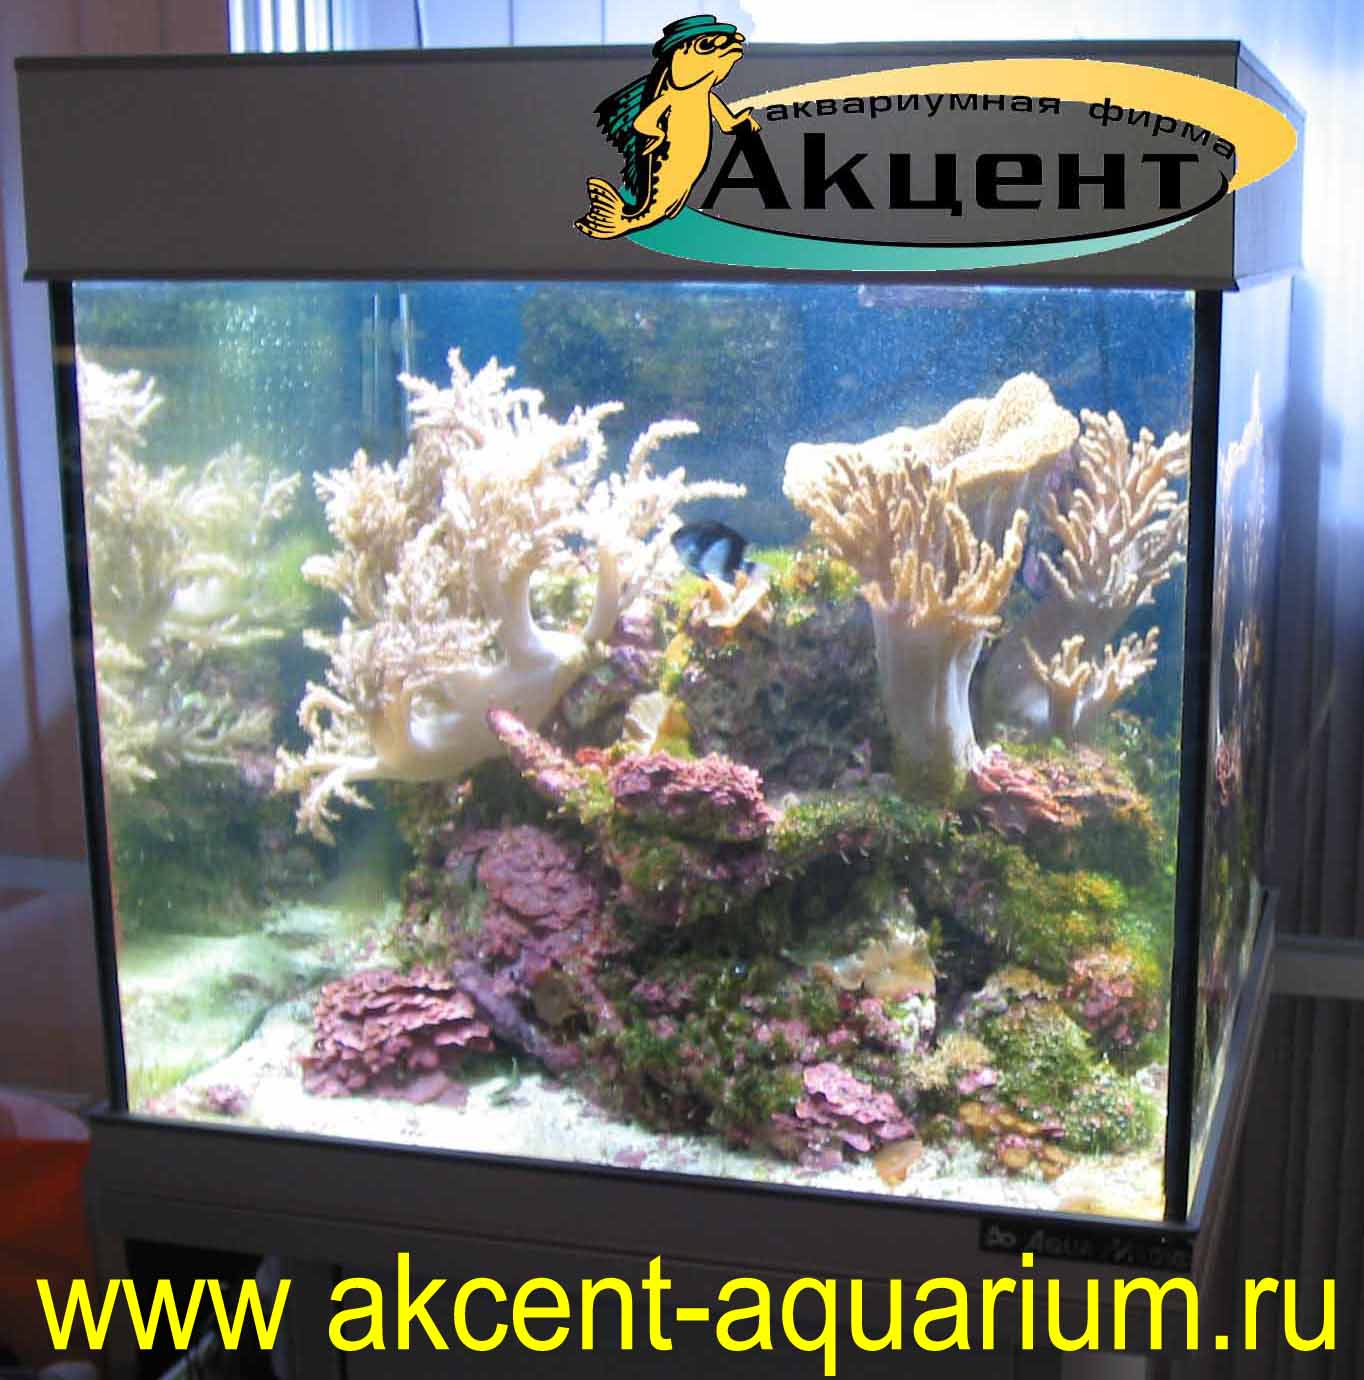 Акцент-аквариум, морской аквариум 100 литров, живые камни, мягкие кораллы